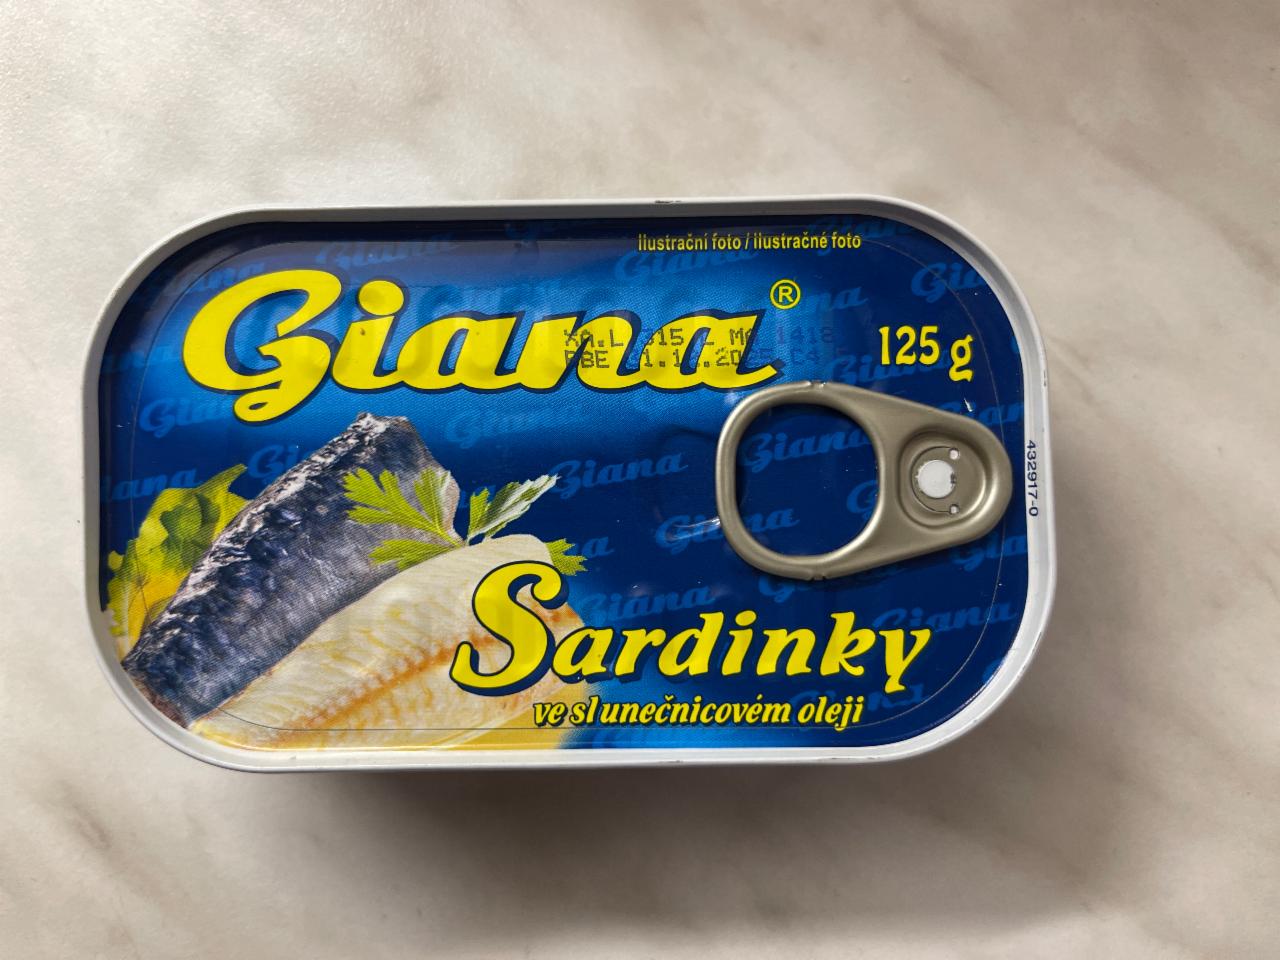 Fotografie - Sardinky ve slunečnicovém oleji Giana